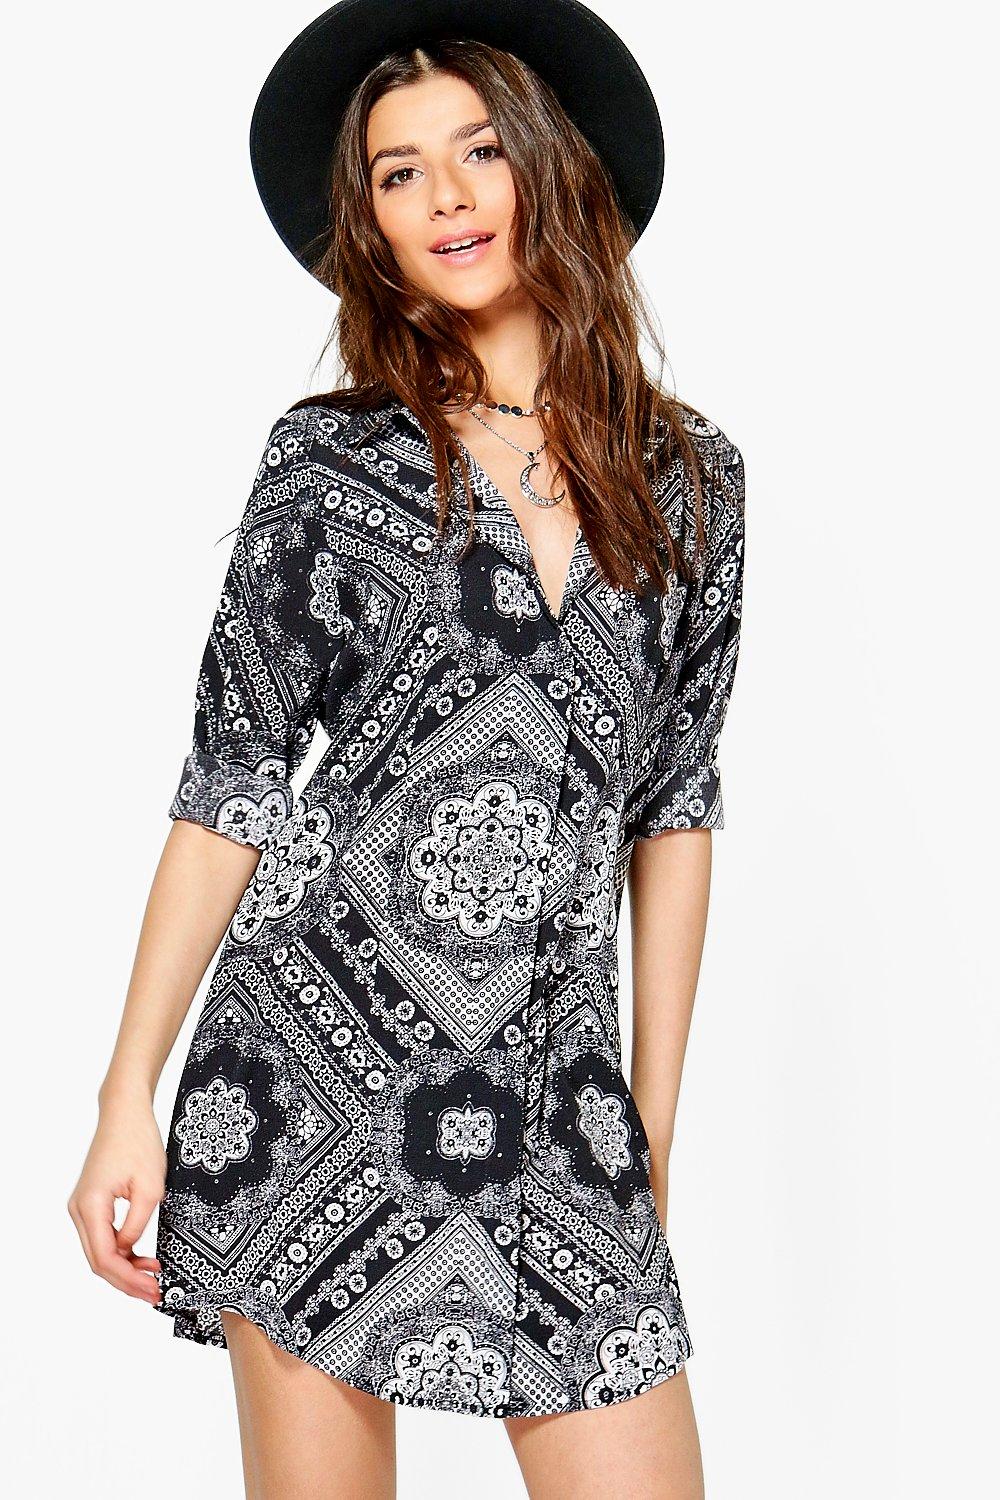 Boohoo Womens Alainia Monochrome Paisley Shirt Dress | eBay